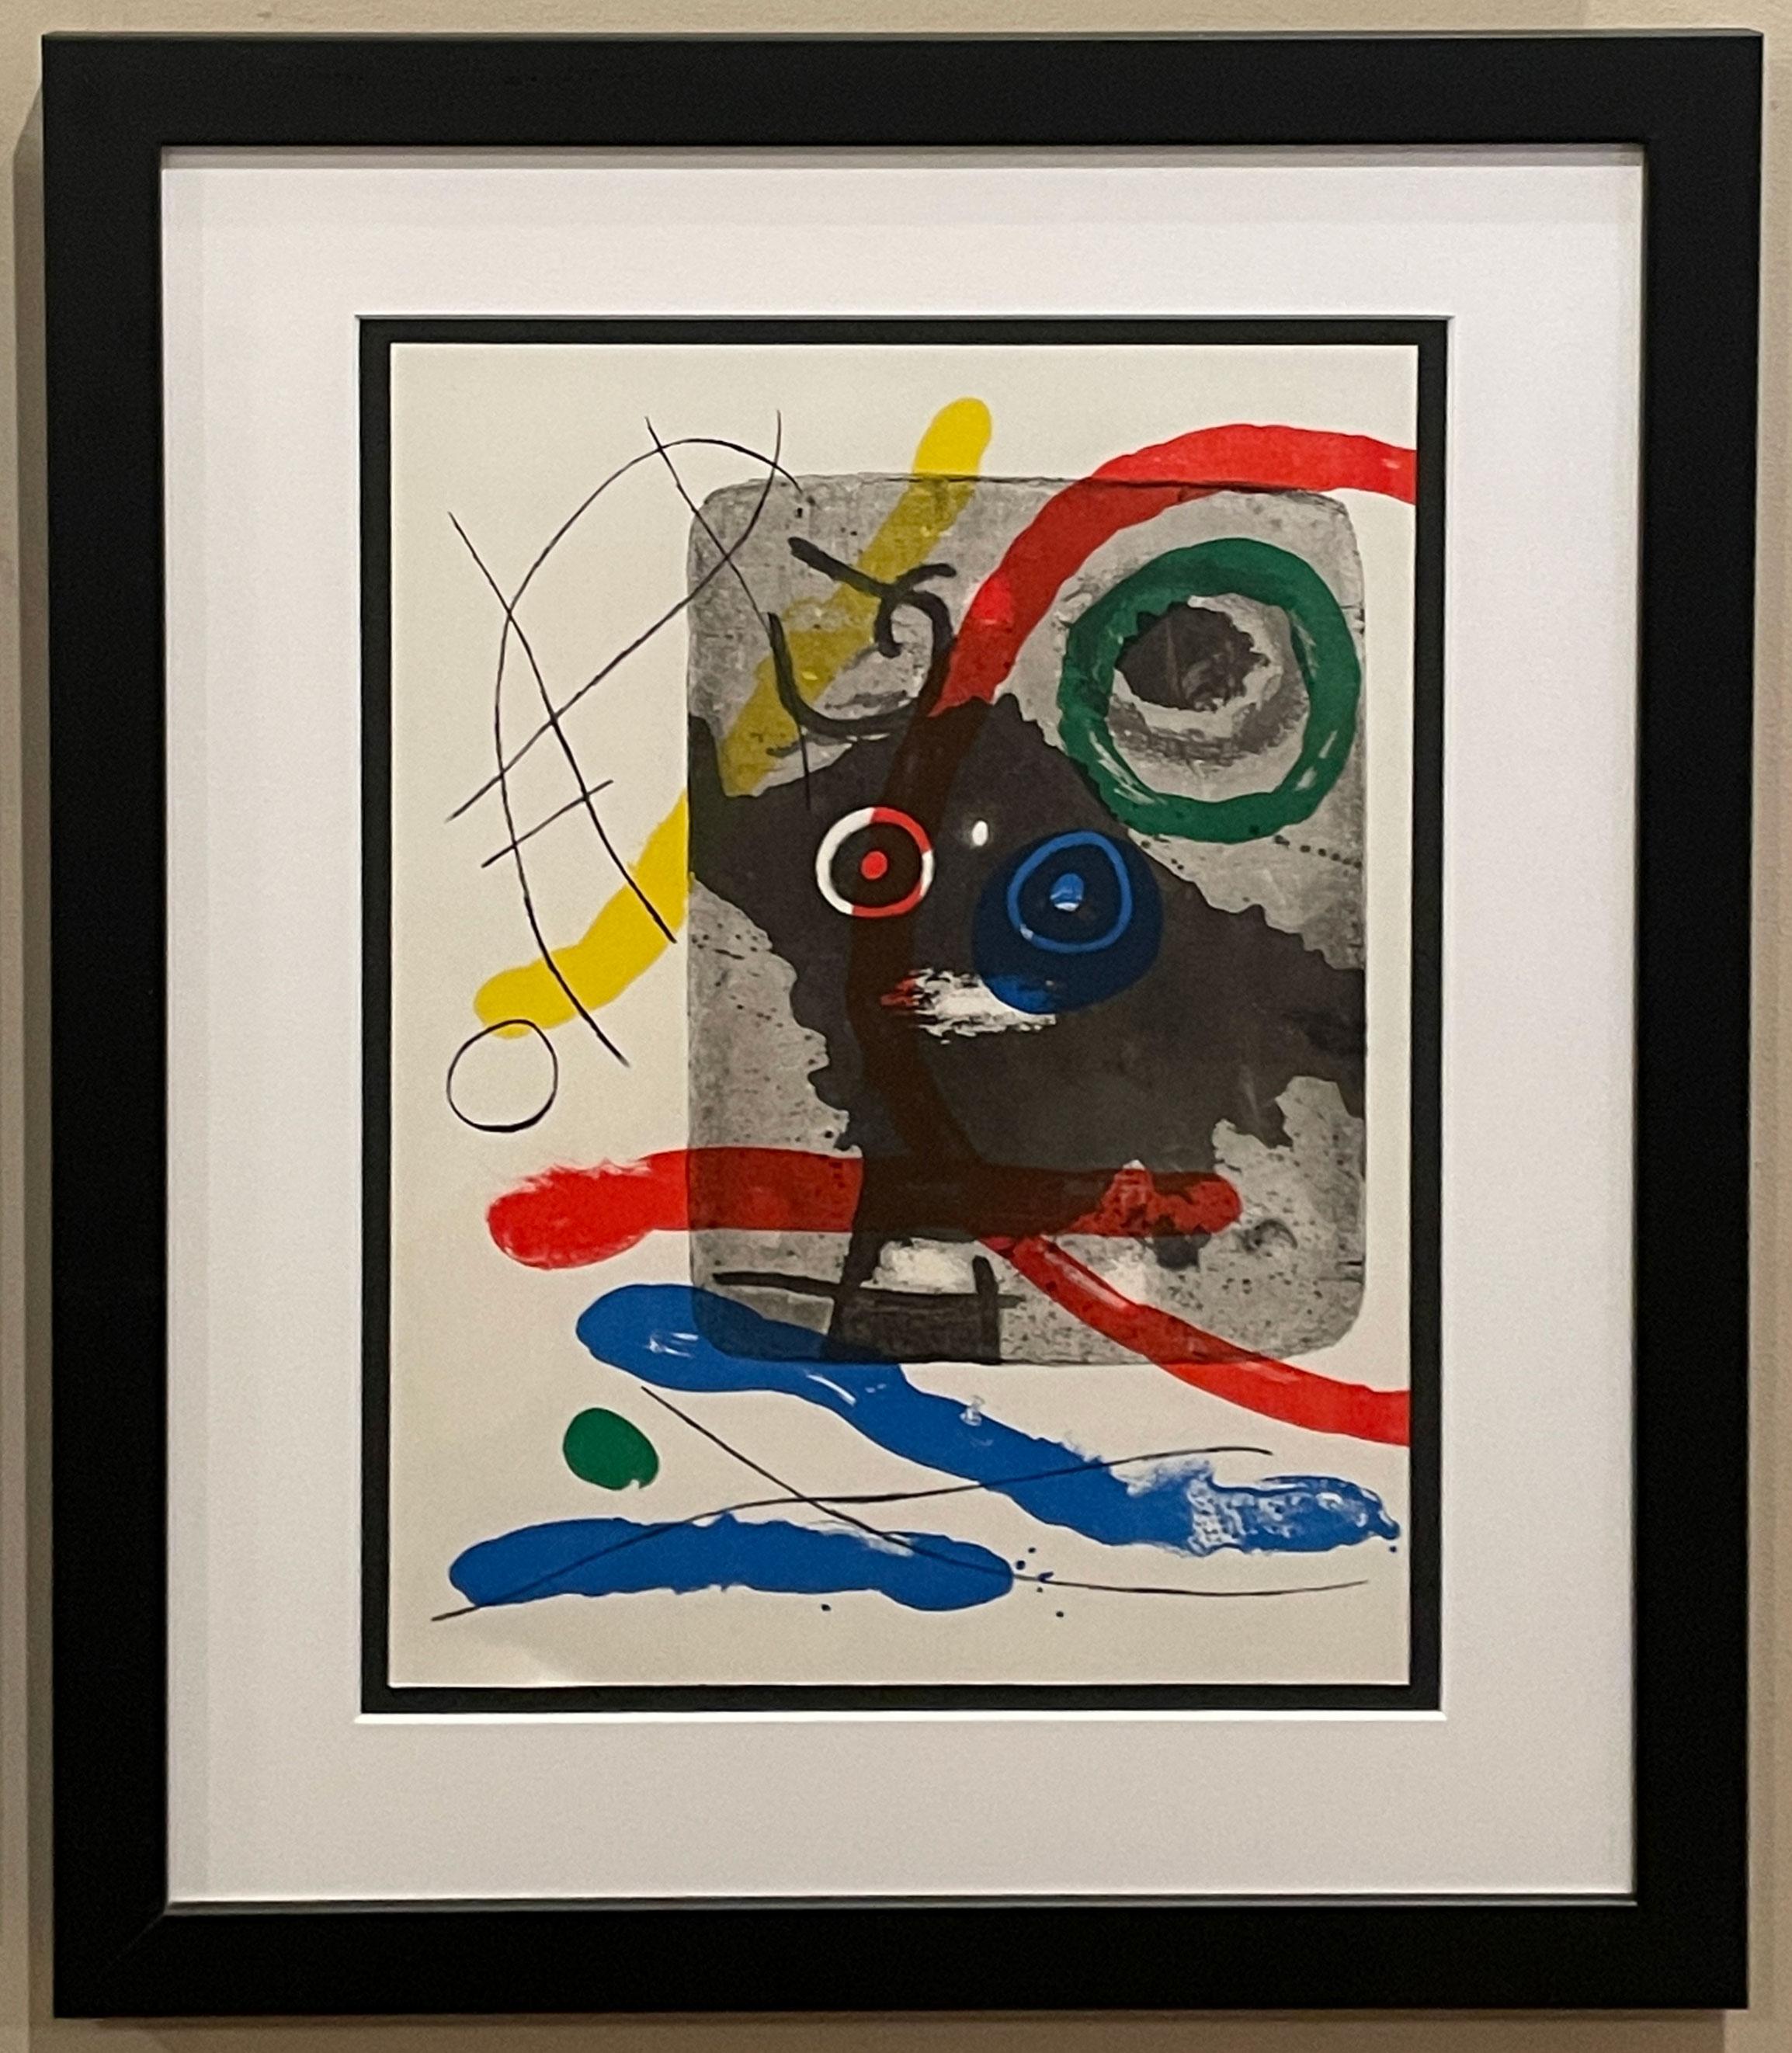 Plate 19, from 1965 Peintures Sur Cartons - Print by Joan Miró